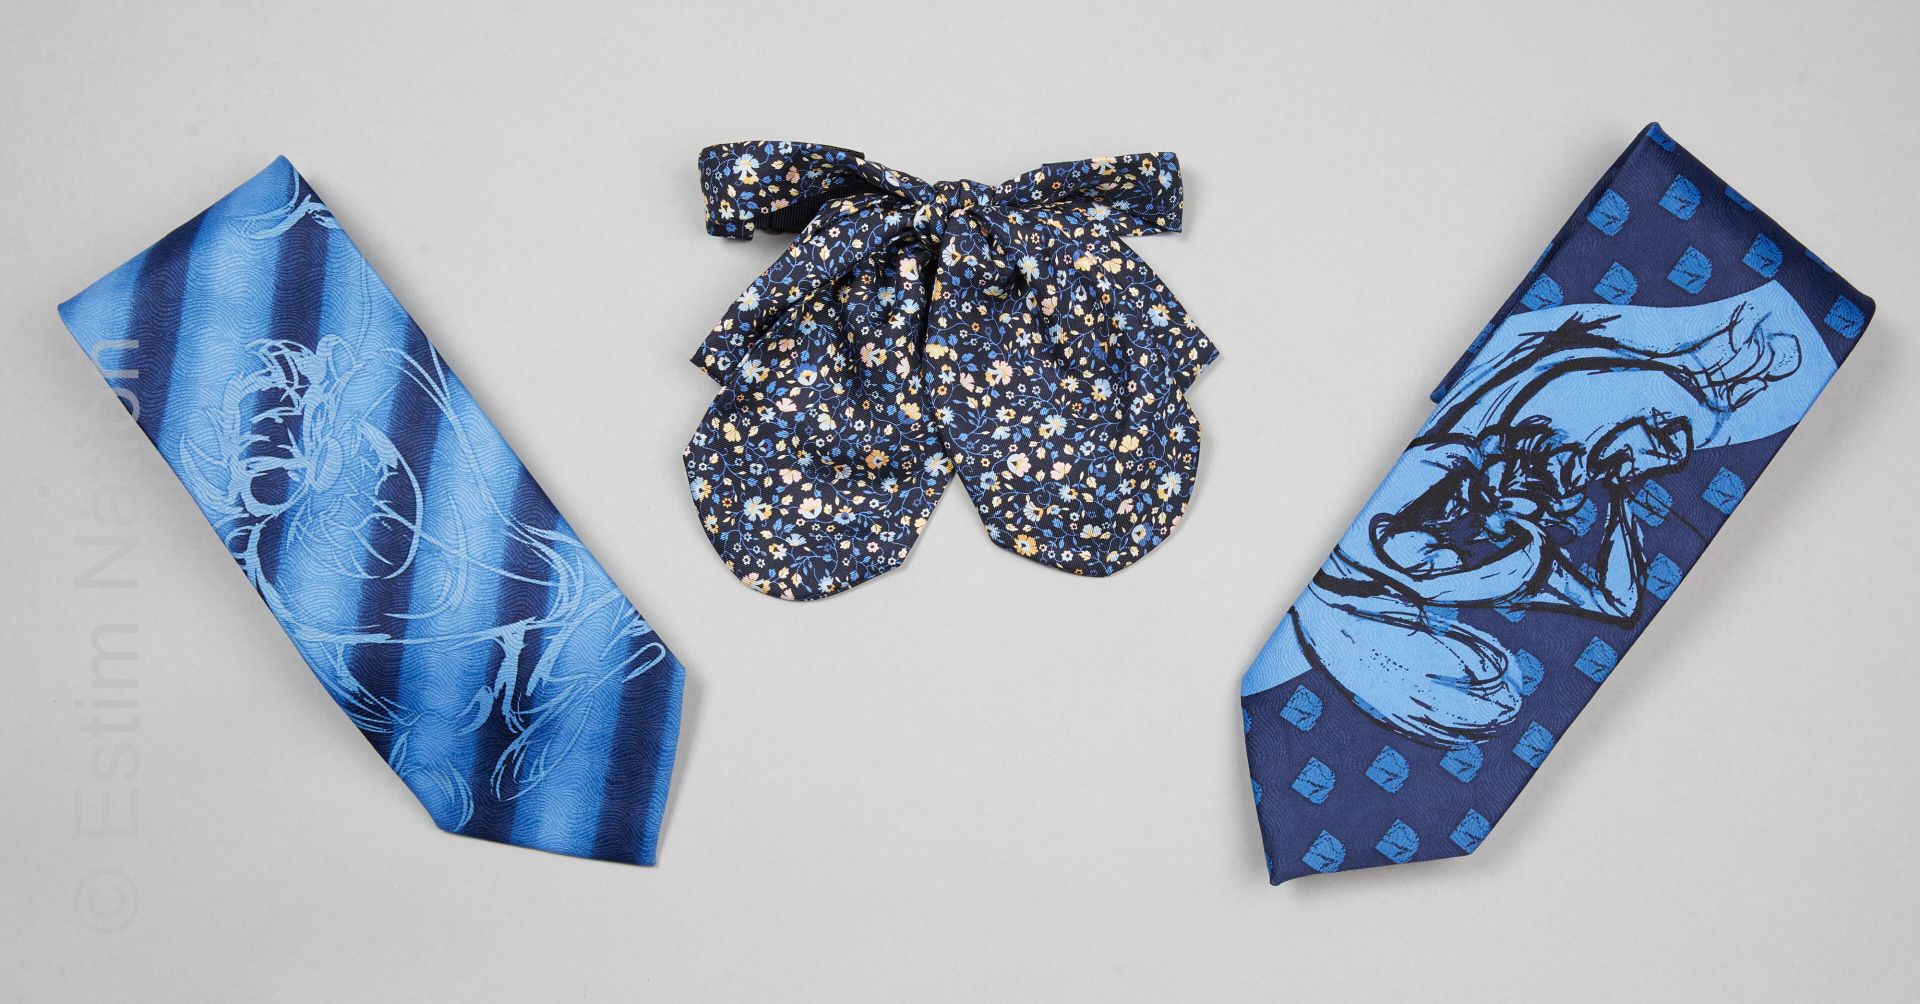 LOONEY TUNES, CHARLES COTONAY 两件蓝色印花塔斯马尼亚魔鬼图案的丝绸领结（全新）和一条自由丝绸领结（无条件保证）。